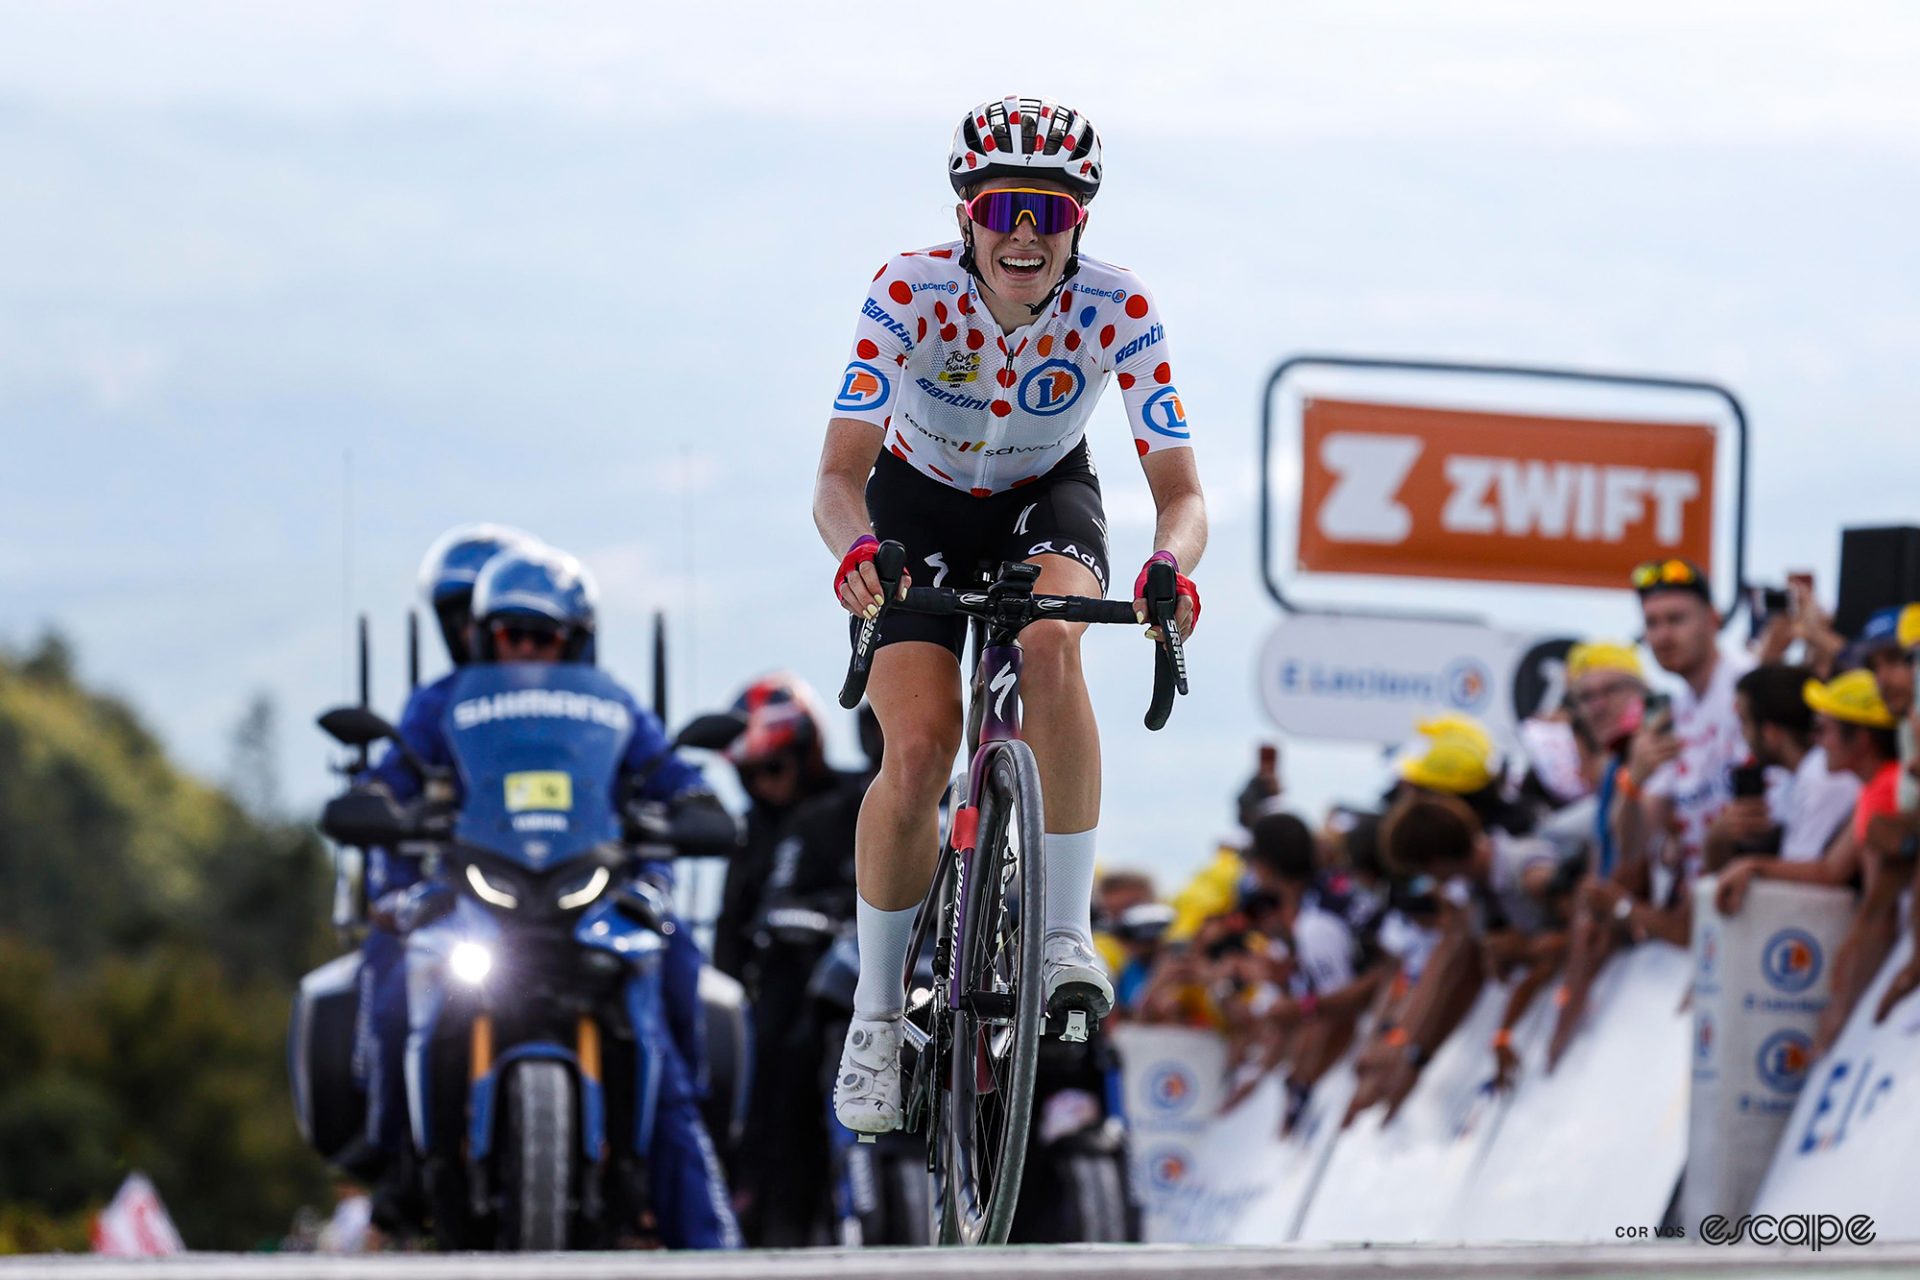 Rotterdam to host first foreign Grand Départ at 2024 Tour de France